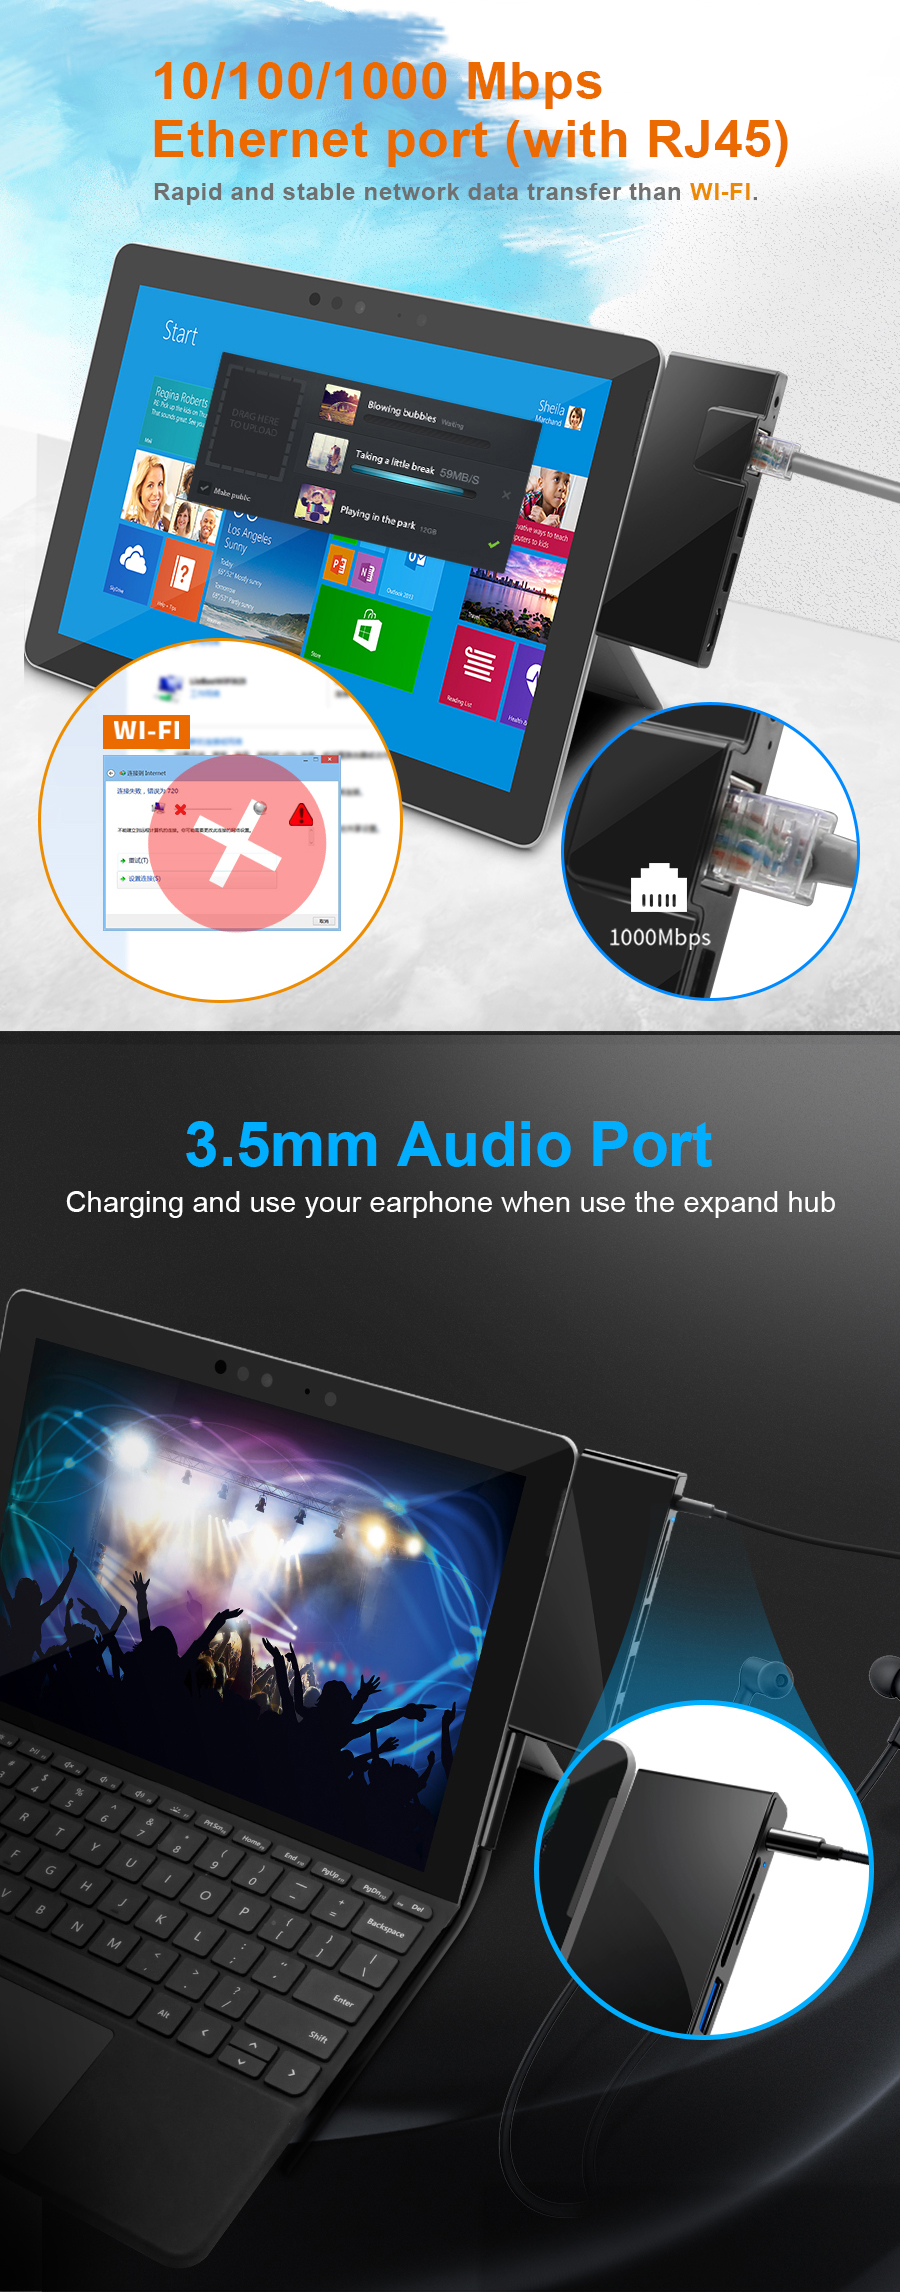 ROCKETEK SGO771 Surface GO Hub 3 * USB 3.0 Hubs SD Card Reader Surface GO Adapter with 2 SD Card Slots 3.5mm Audio Port